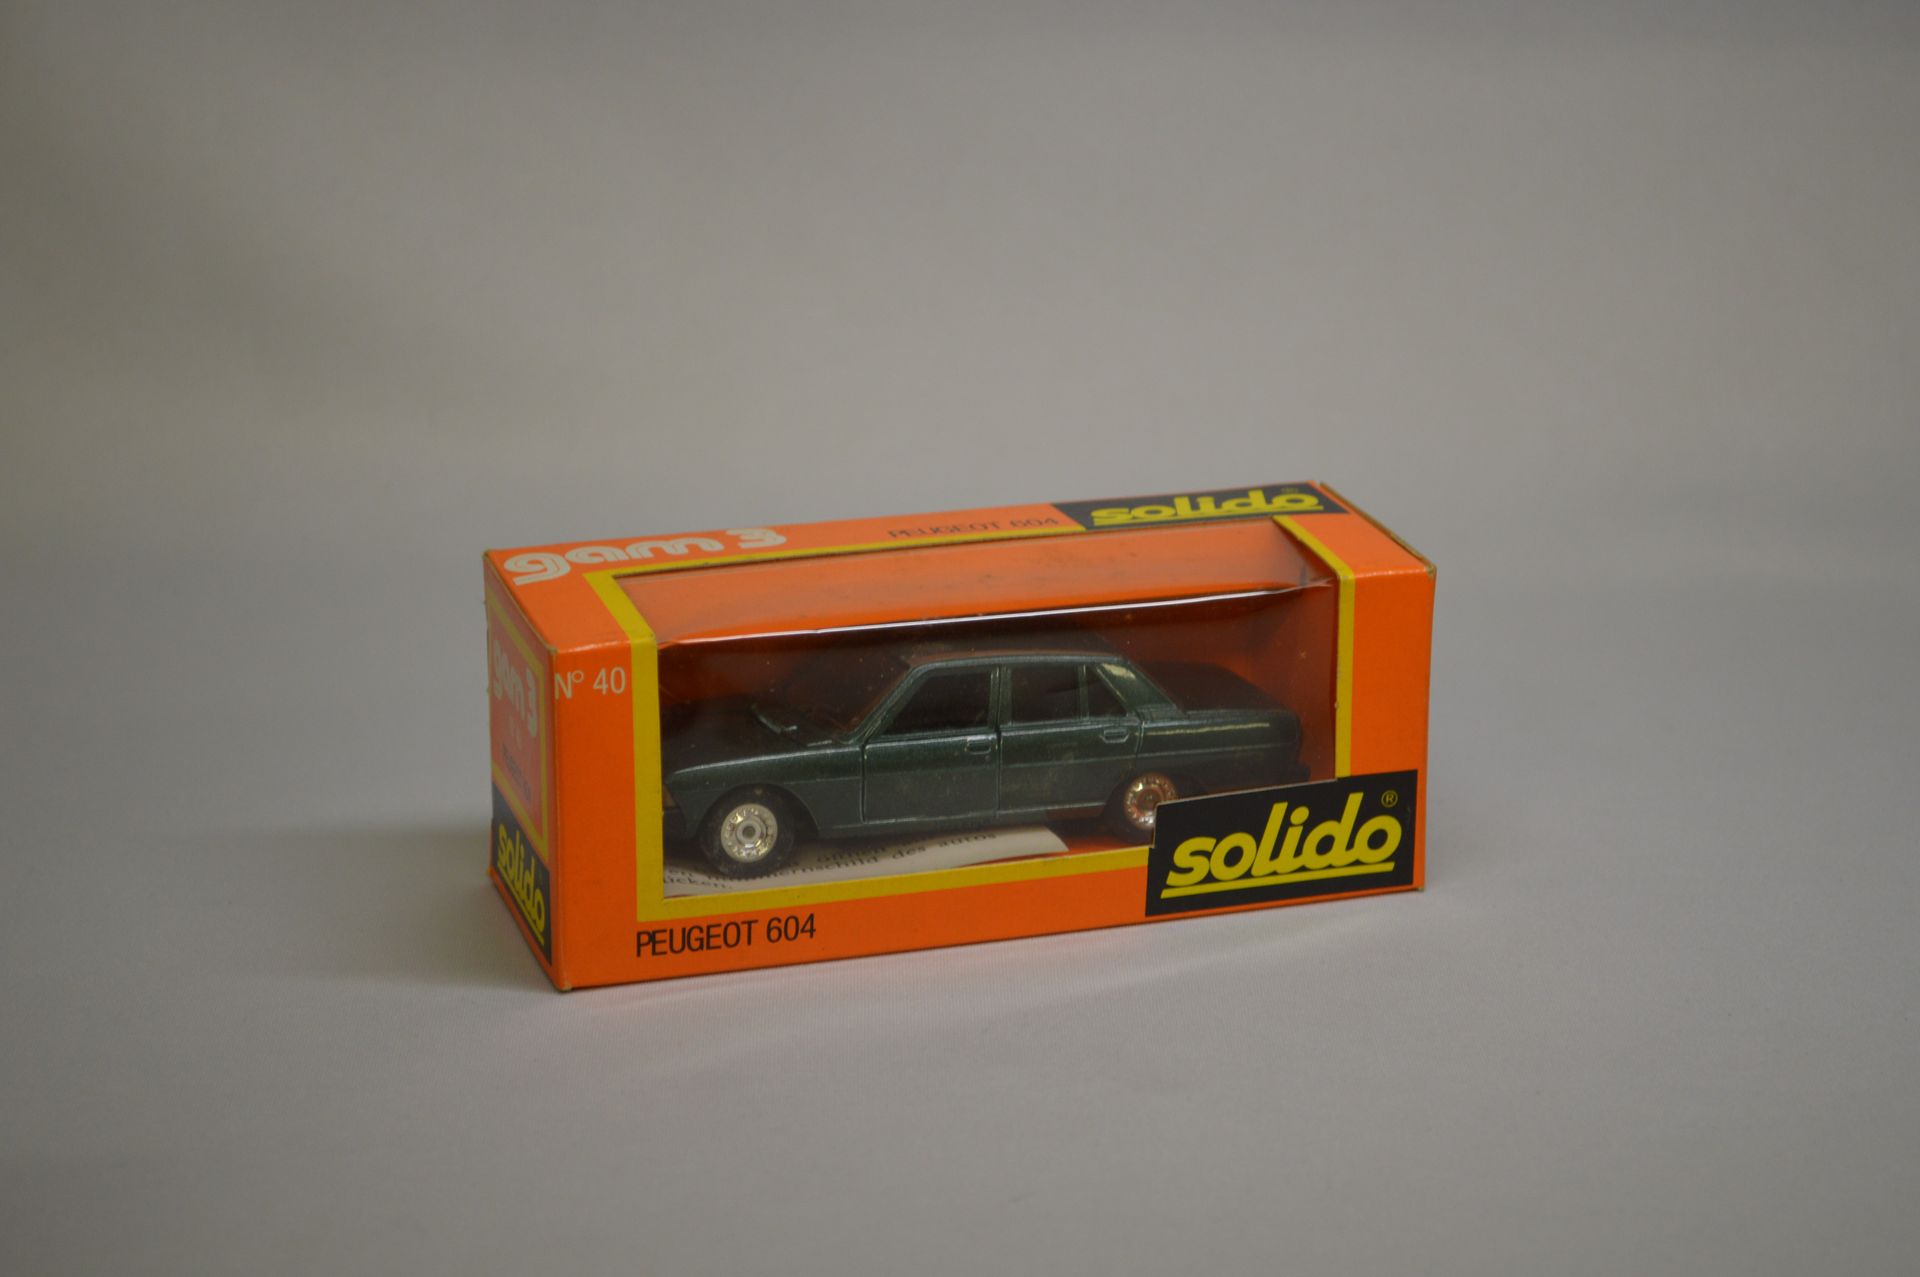 Null SOLIDO - GAM 3 - 客车：标致604，编号40，绿色，有标志。

原装盒。出处：一位伟大收藏家的遗产。